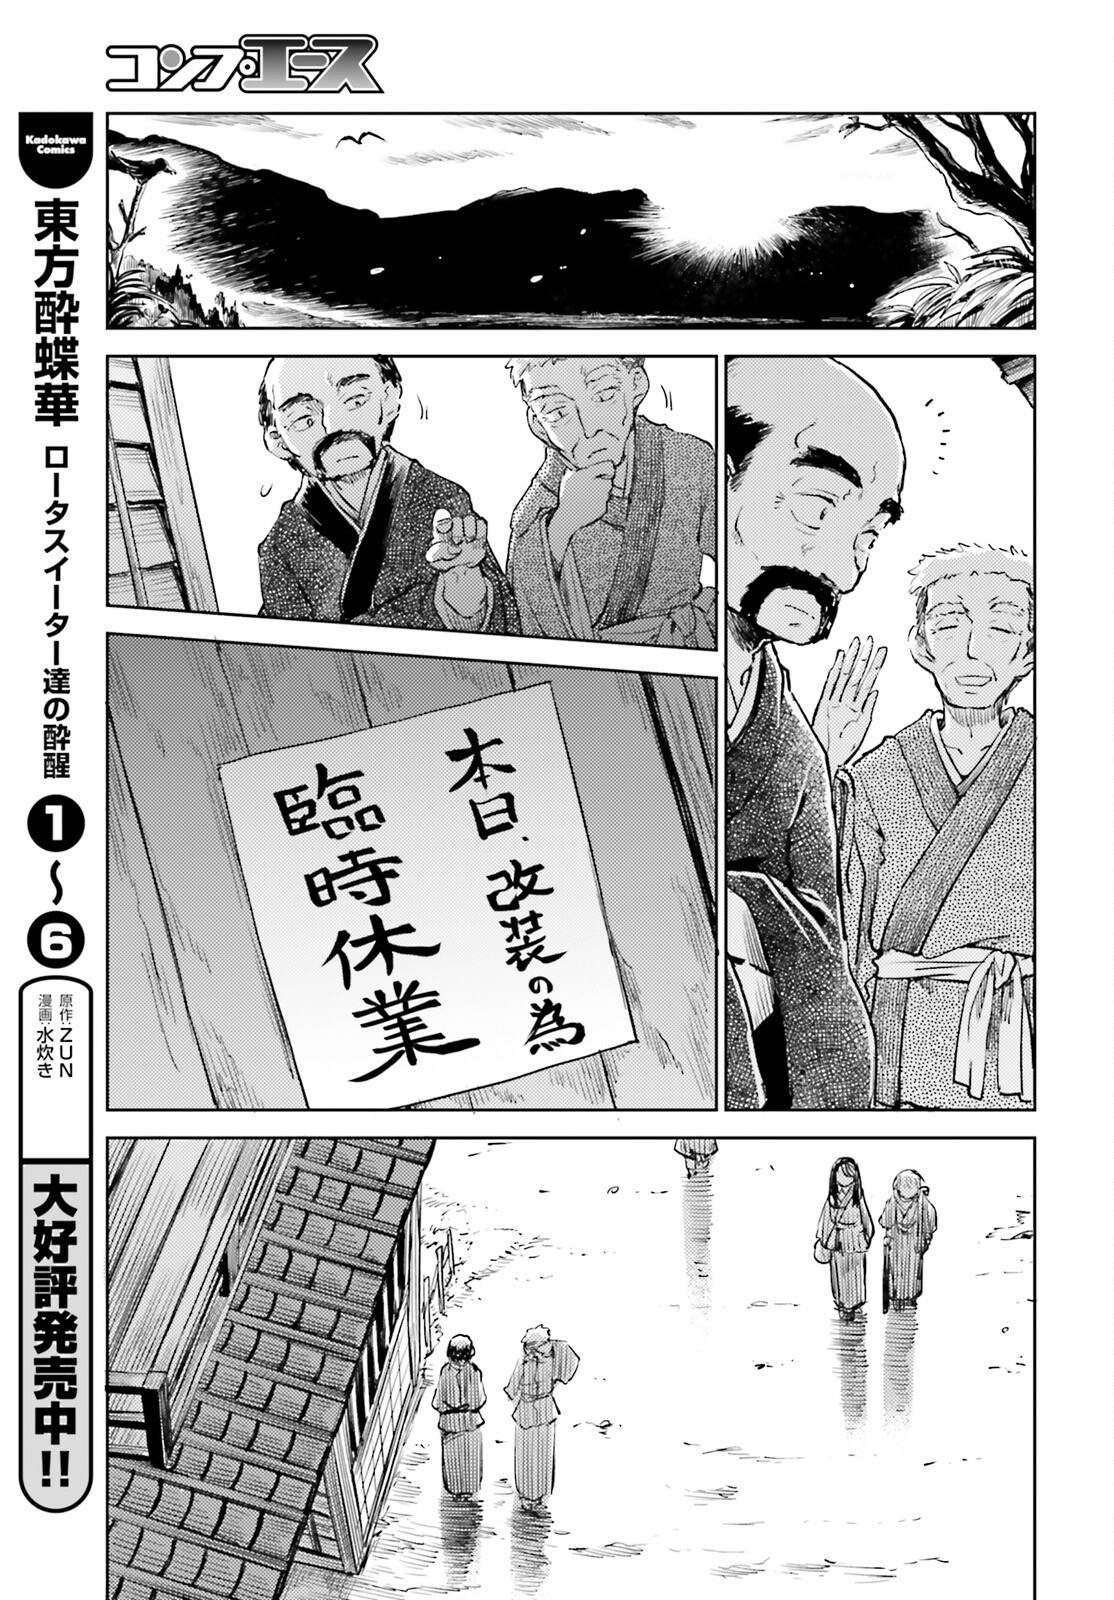 Touhouyoi Chouka Routasuiitaa-tachi no Yoiza - Chapter 53 - Page 3